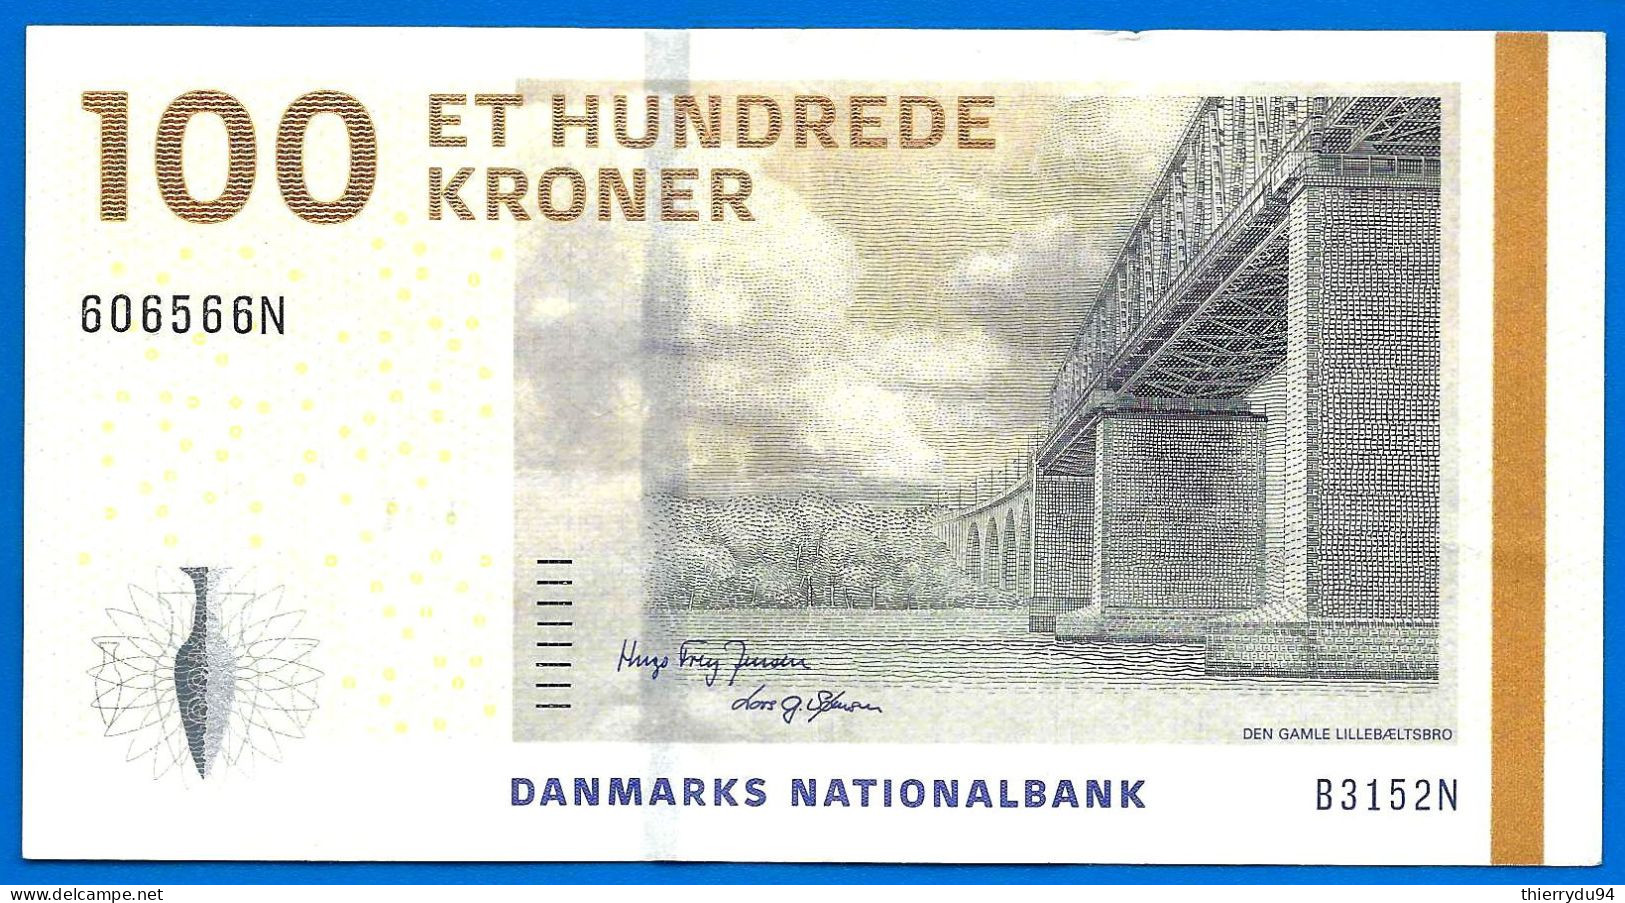 Danemark 100 Couronnes 2009 Pont Bridge Kroner Que Prix + Port Banknote Danmarks Danmark Paypal Bitcoin OK - Denmark